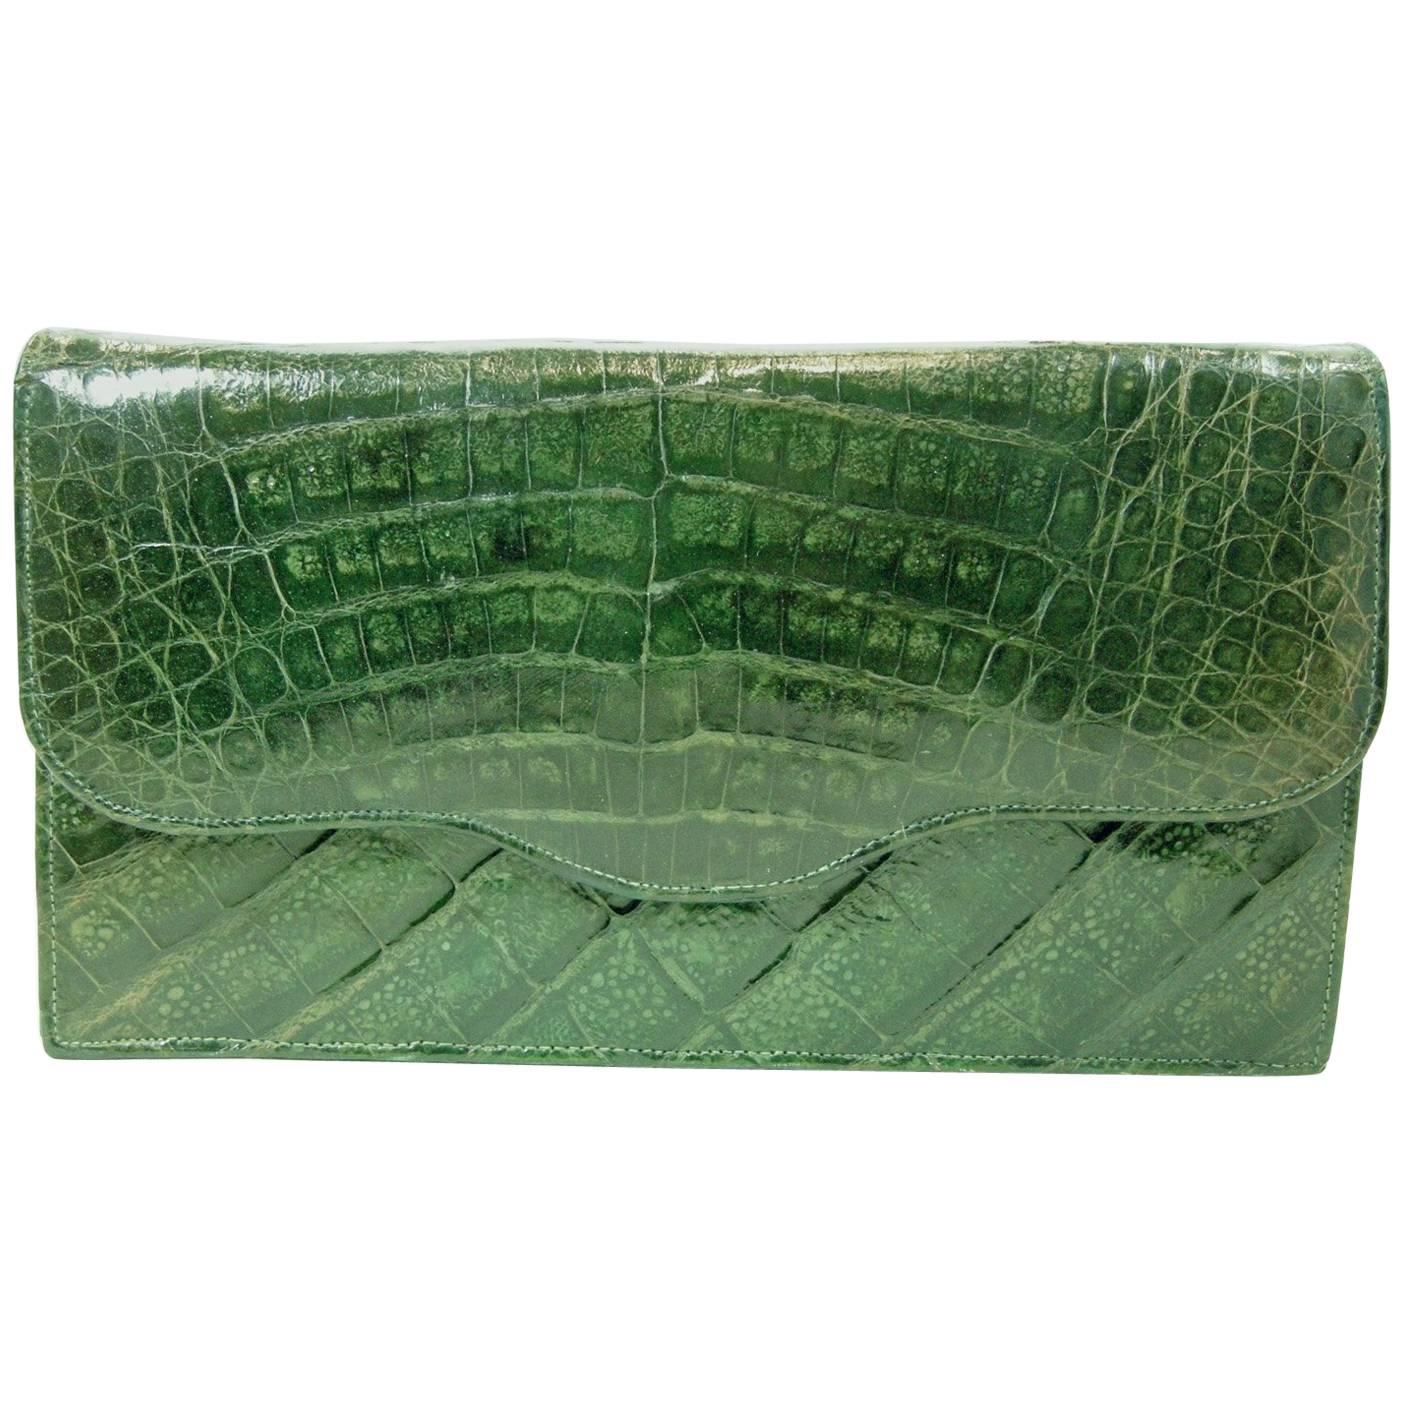 Vintage 1940s Green Crocodile Clutch Bag